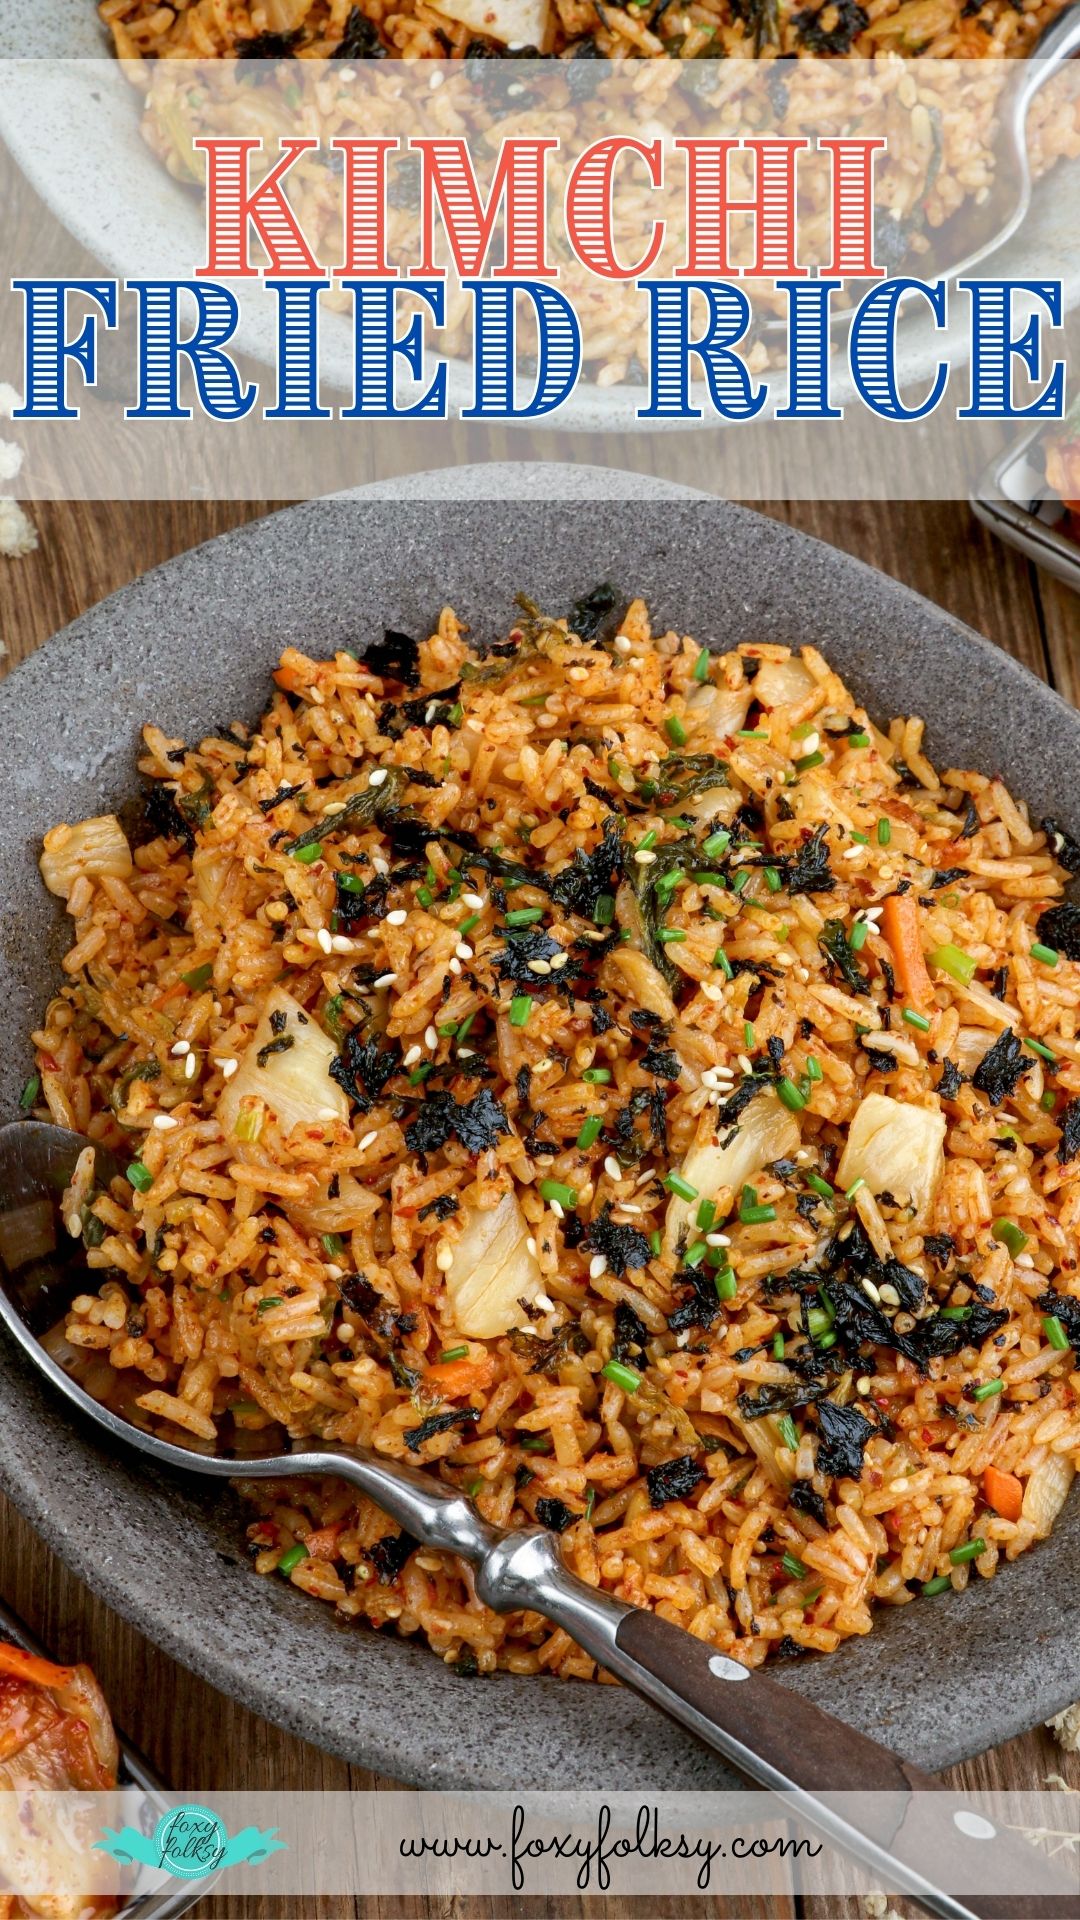 Kimchi fried rice served on a plate.